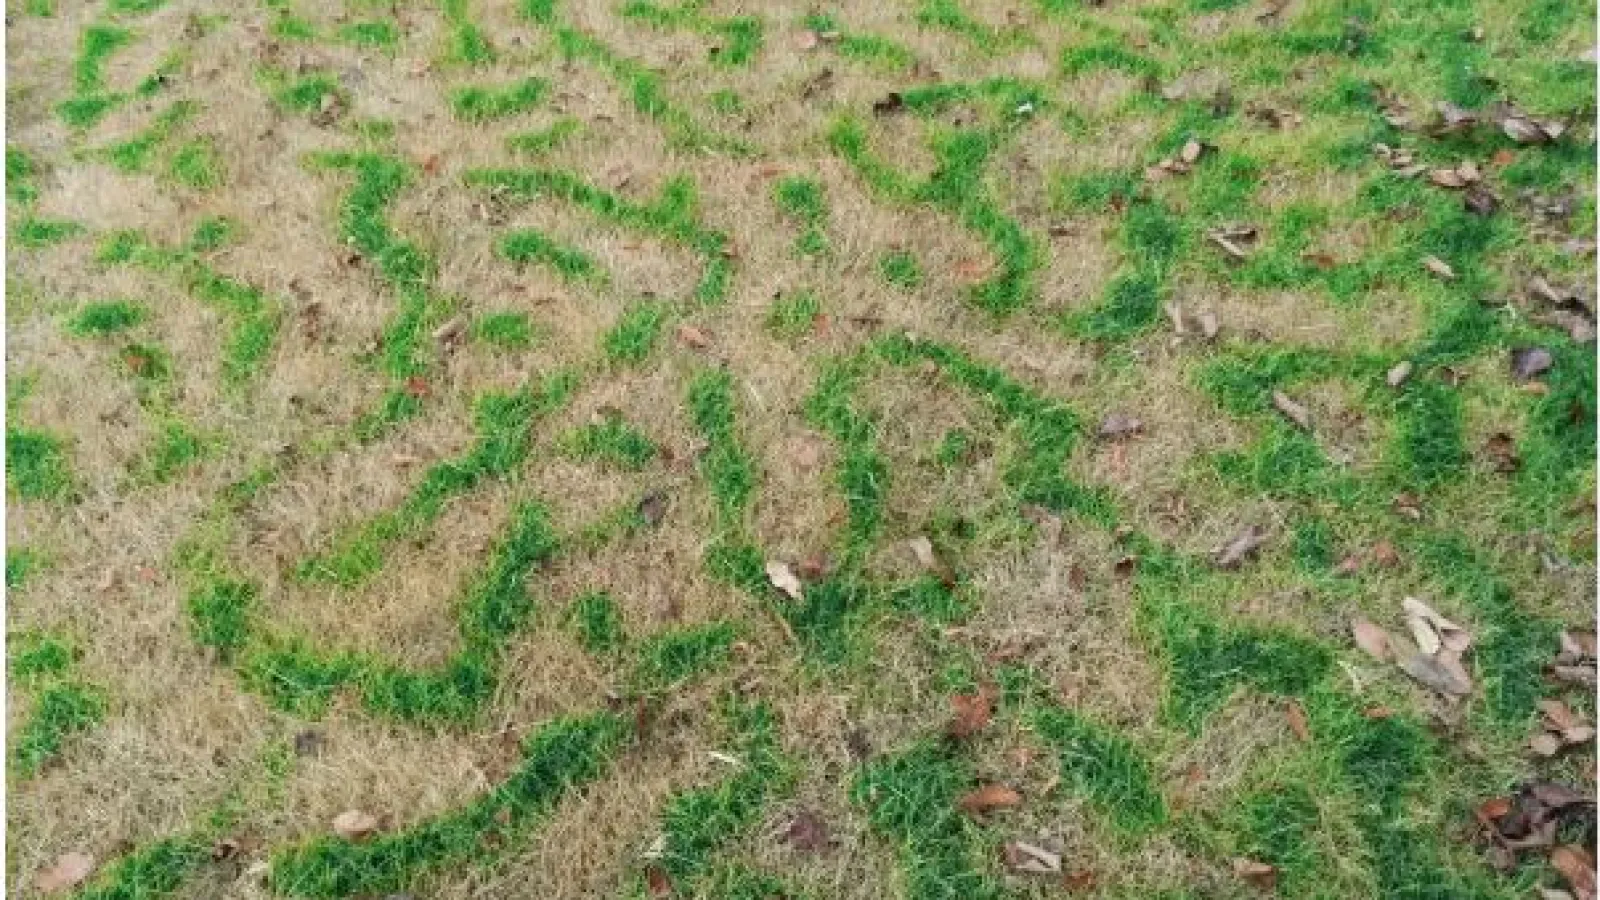 Grass Going Into Dormancy